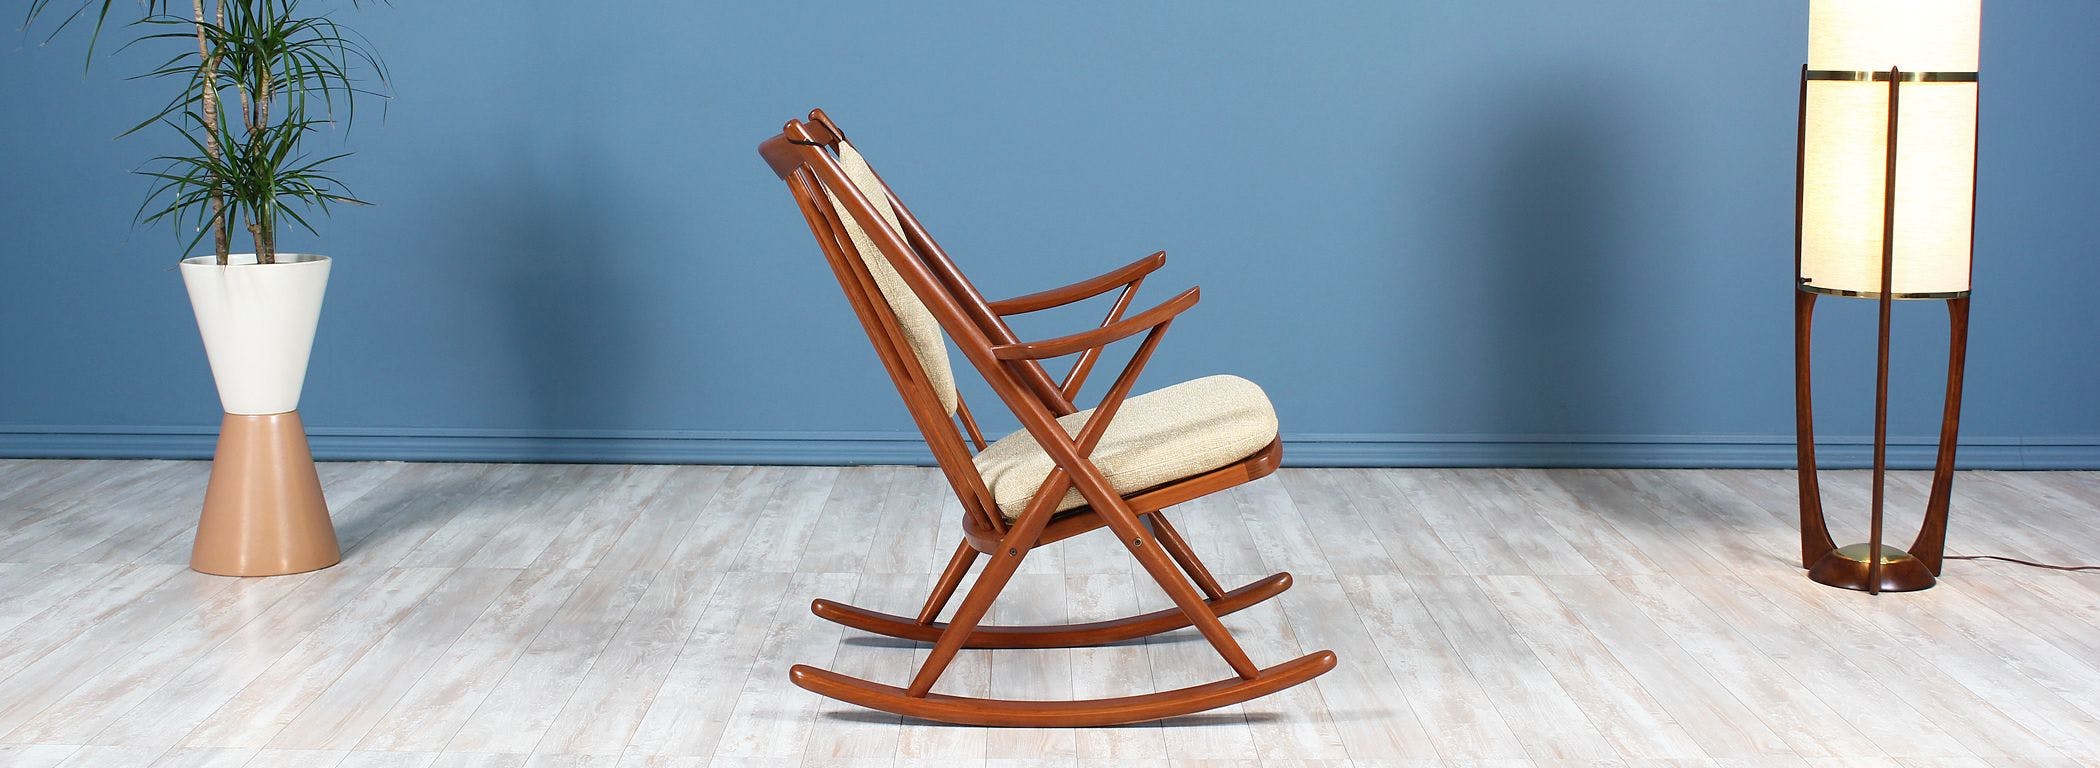 Original Ludwig Mies van der Rohe “Barcelona” Lounge Chairs for Knoll media 3